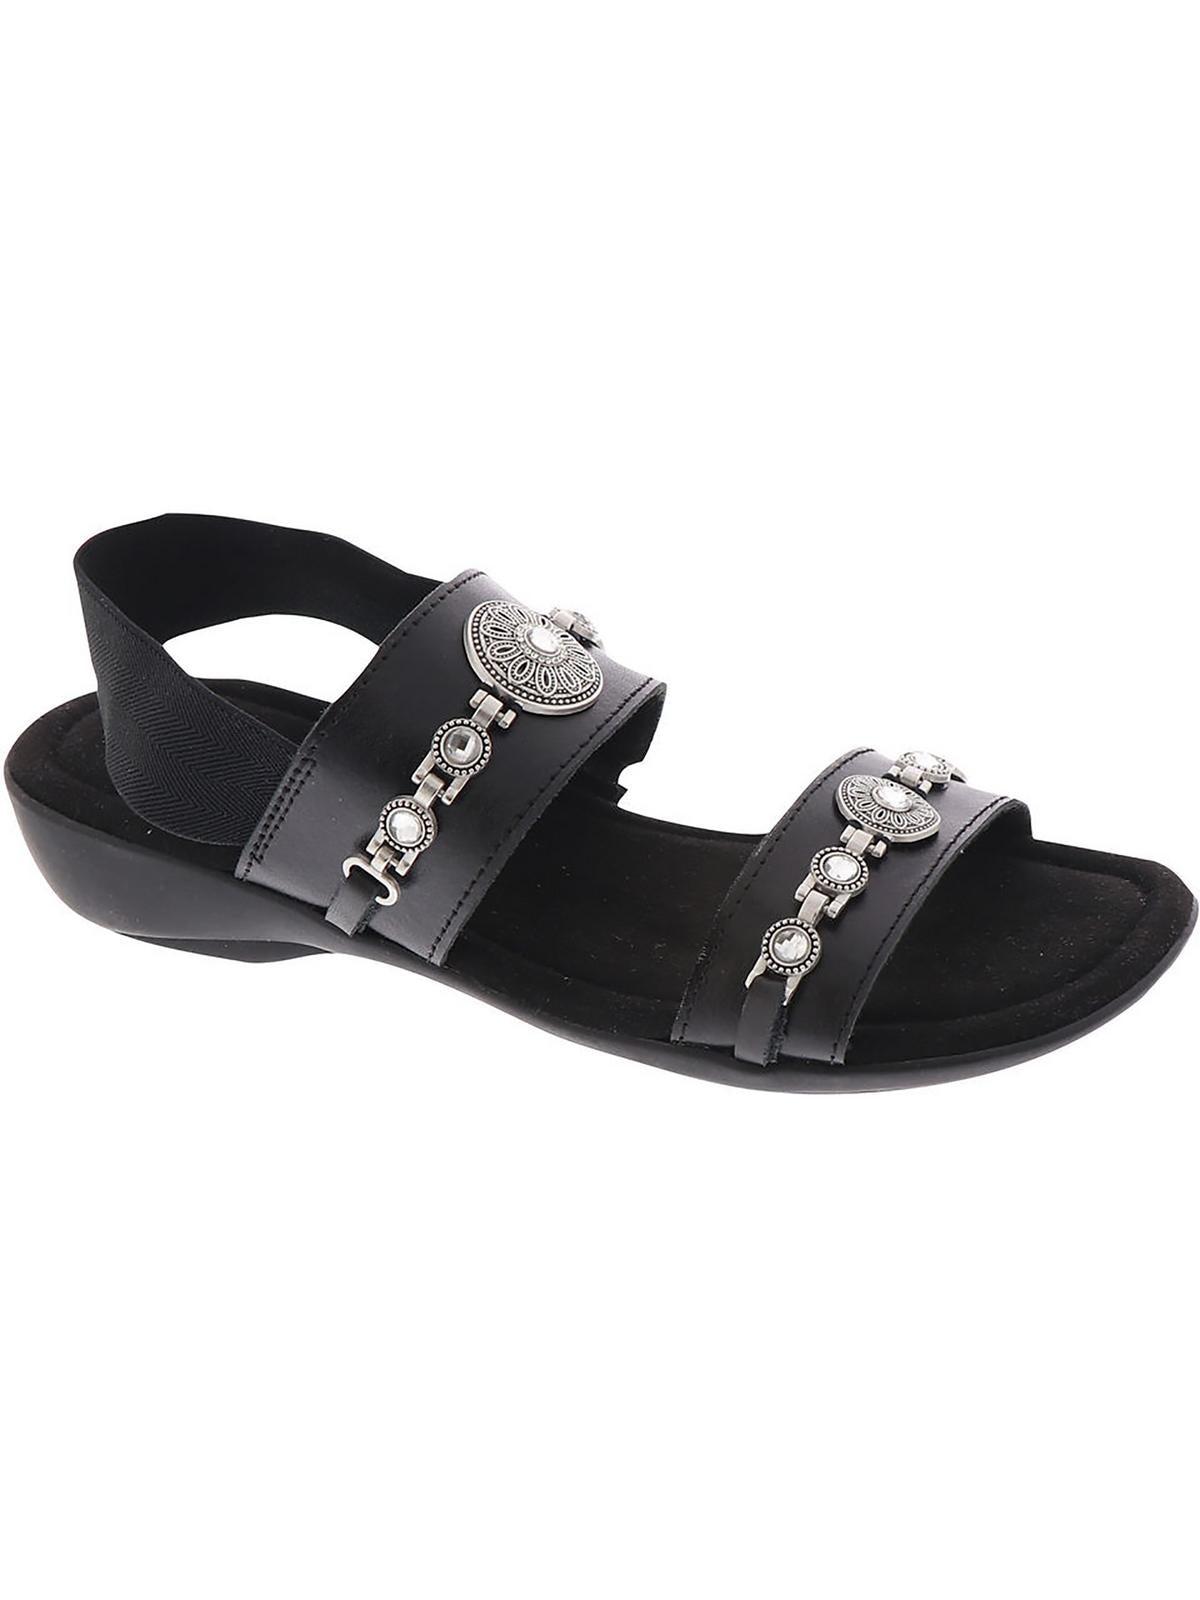 Minnetonka Womens MILOS Faux Leather Open Toe Gladiator Sandals